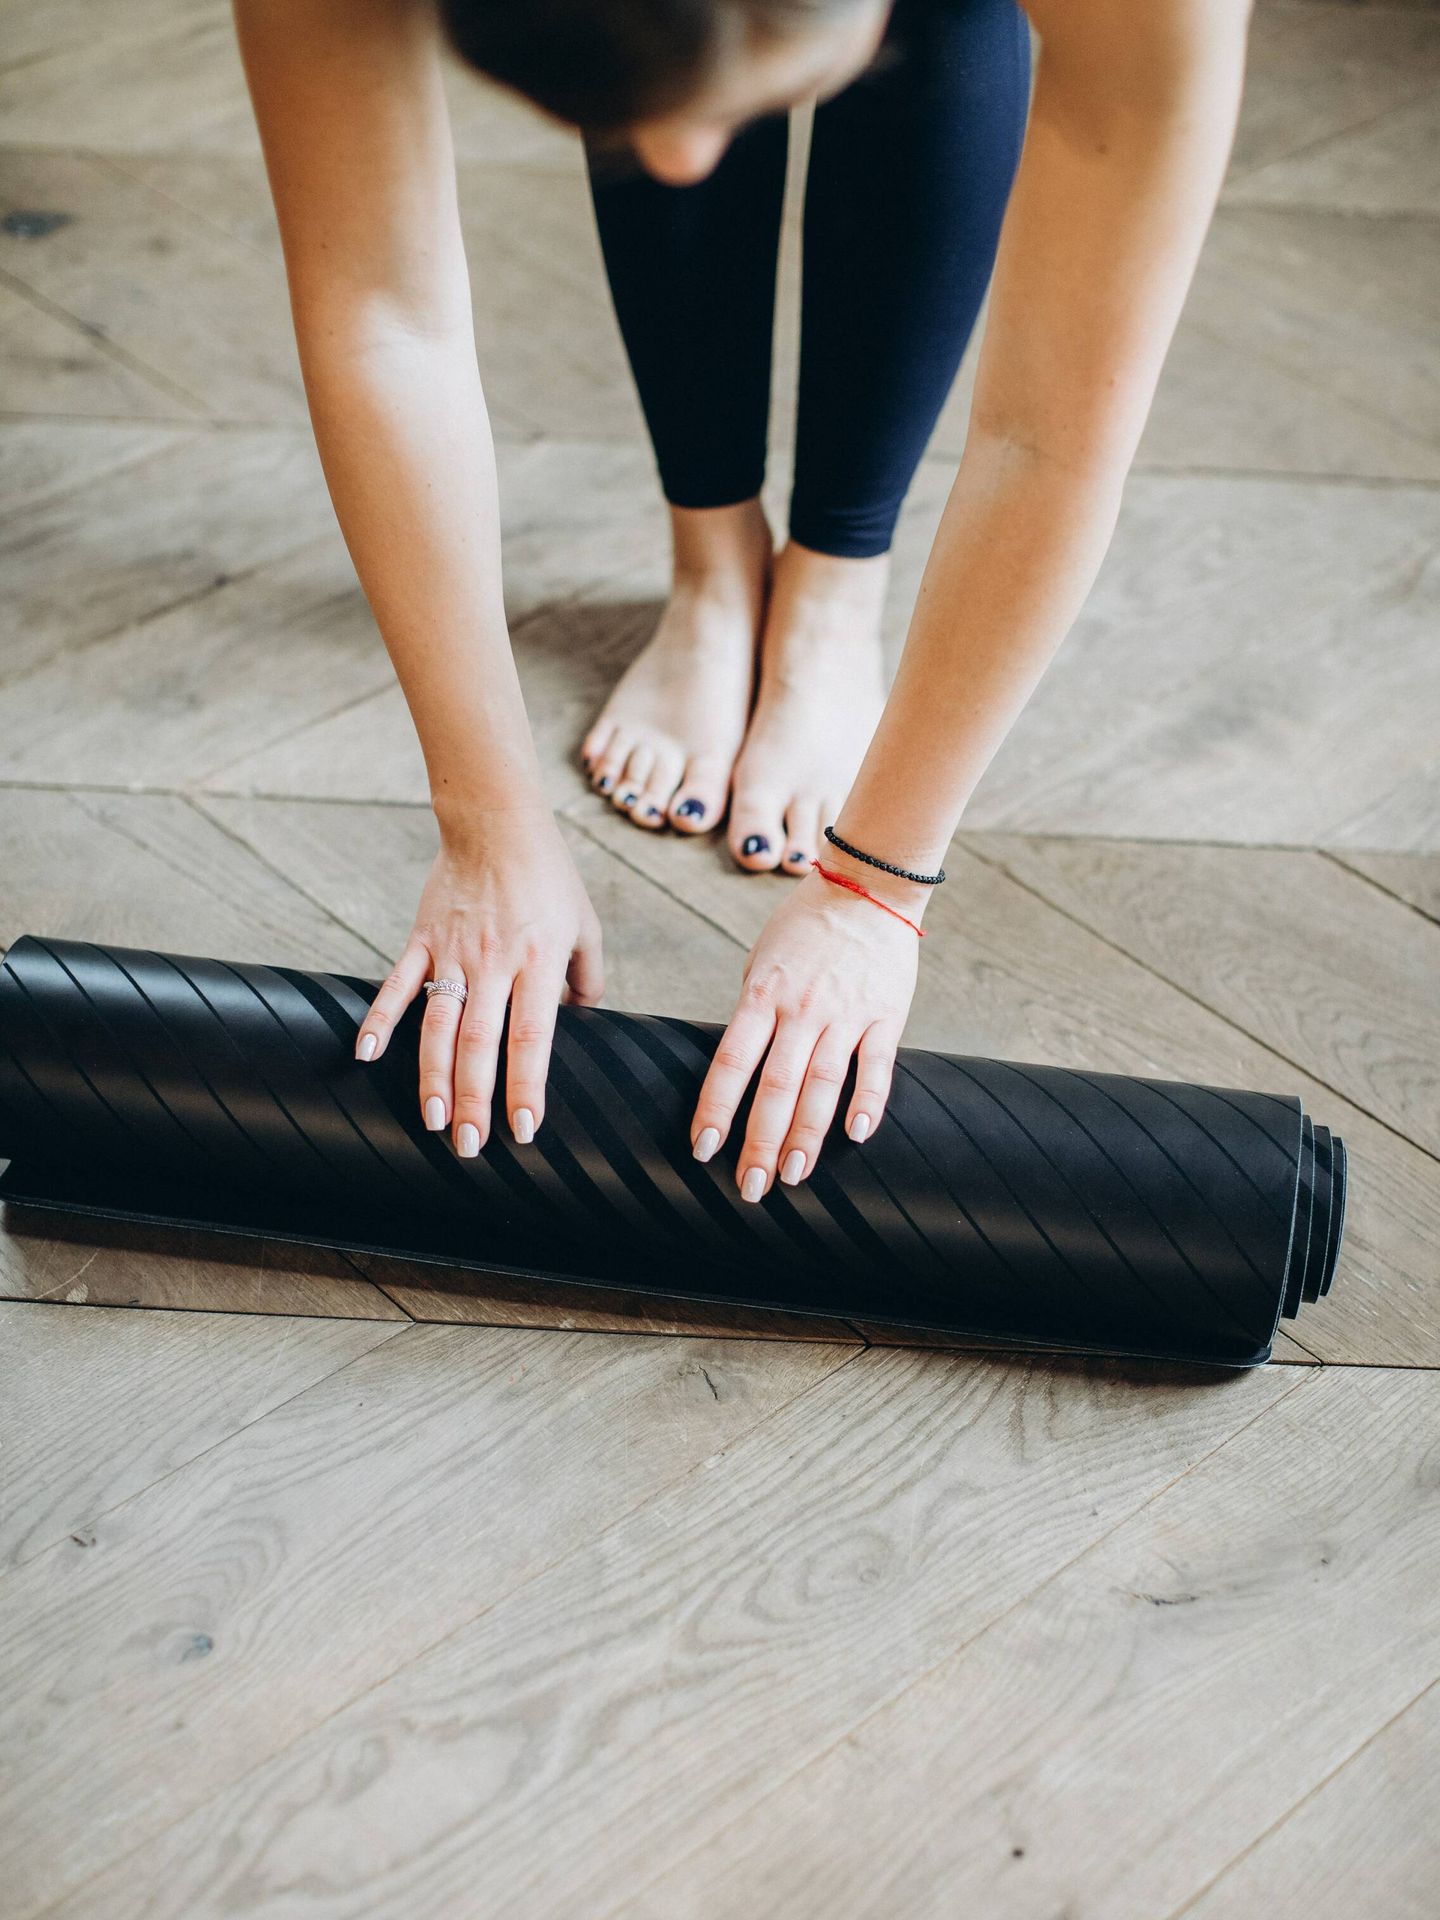 Posturas de yoga para principiantes. (Pexels/Elina Fairytale)